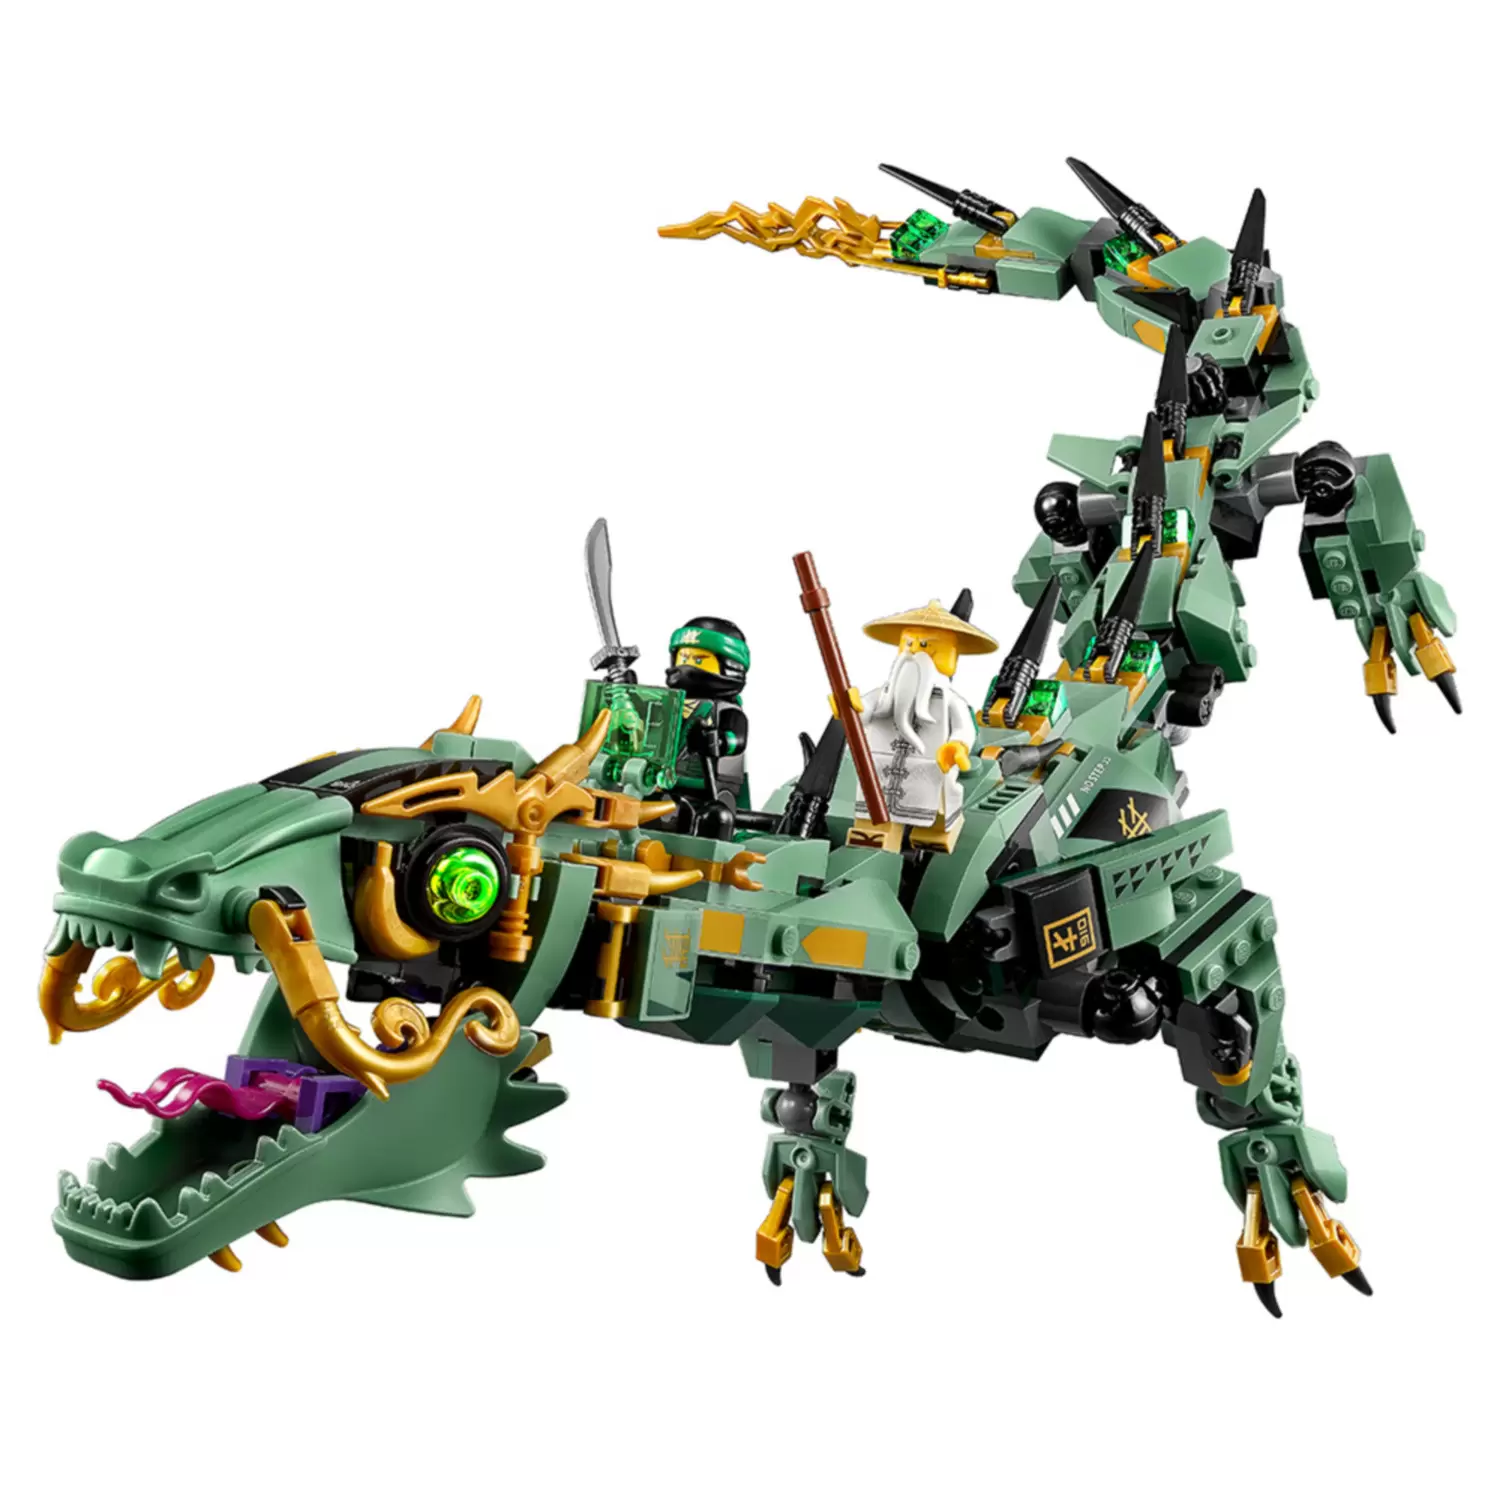 The LEGO Ninjago Movie - Green Ninja Mech Dragon